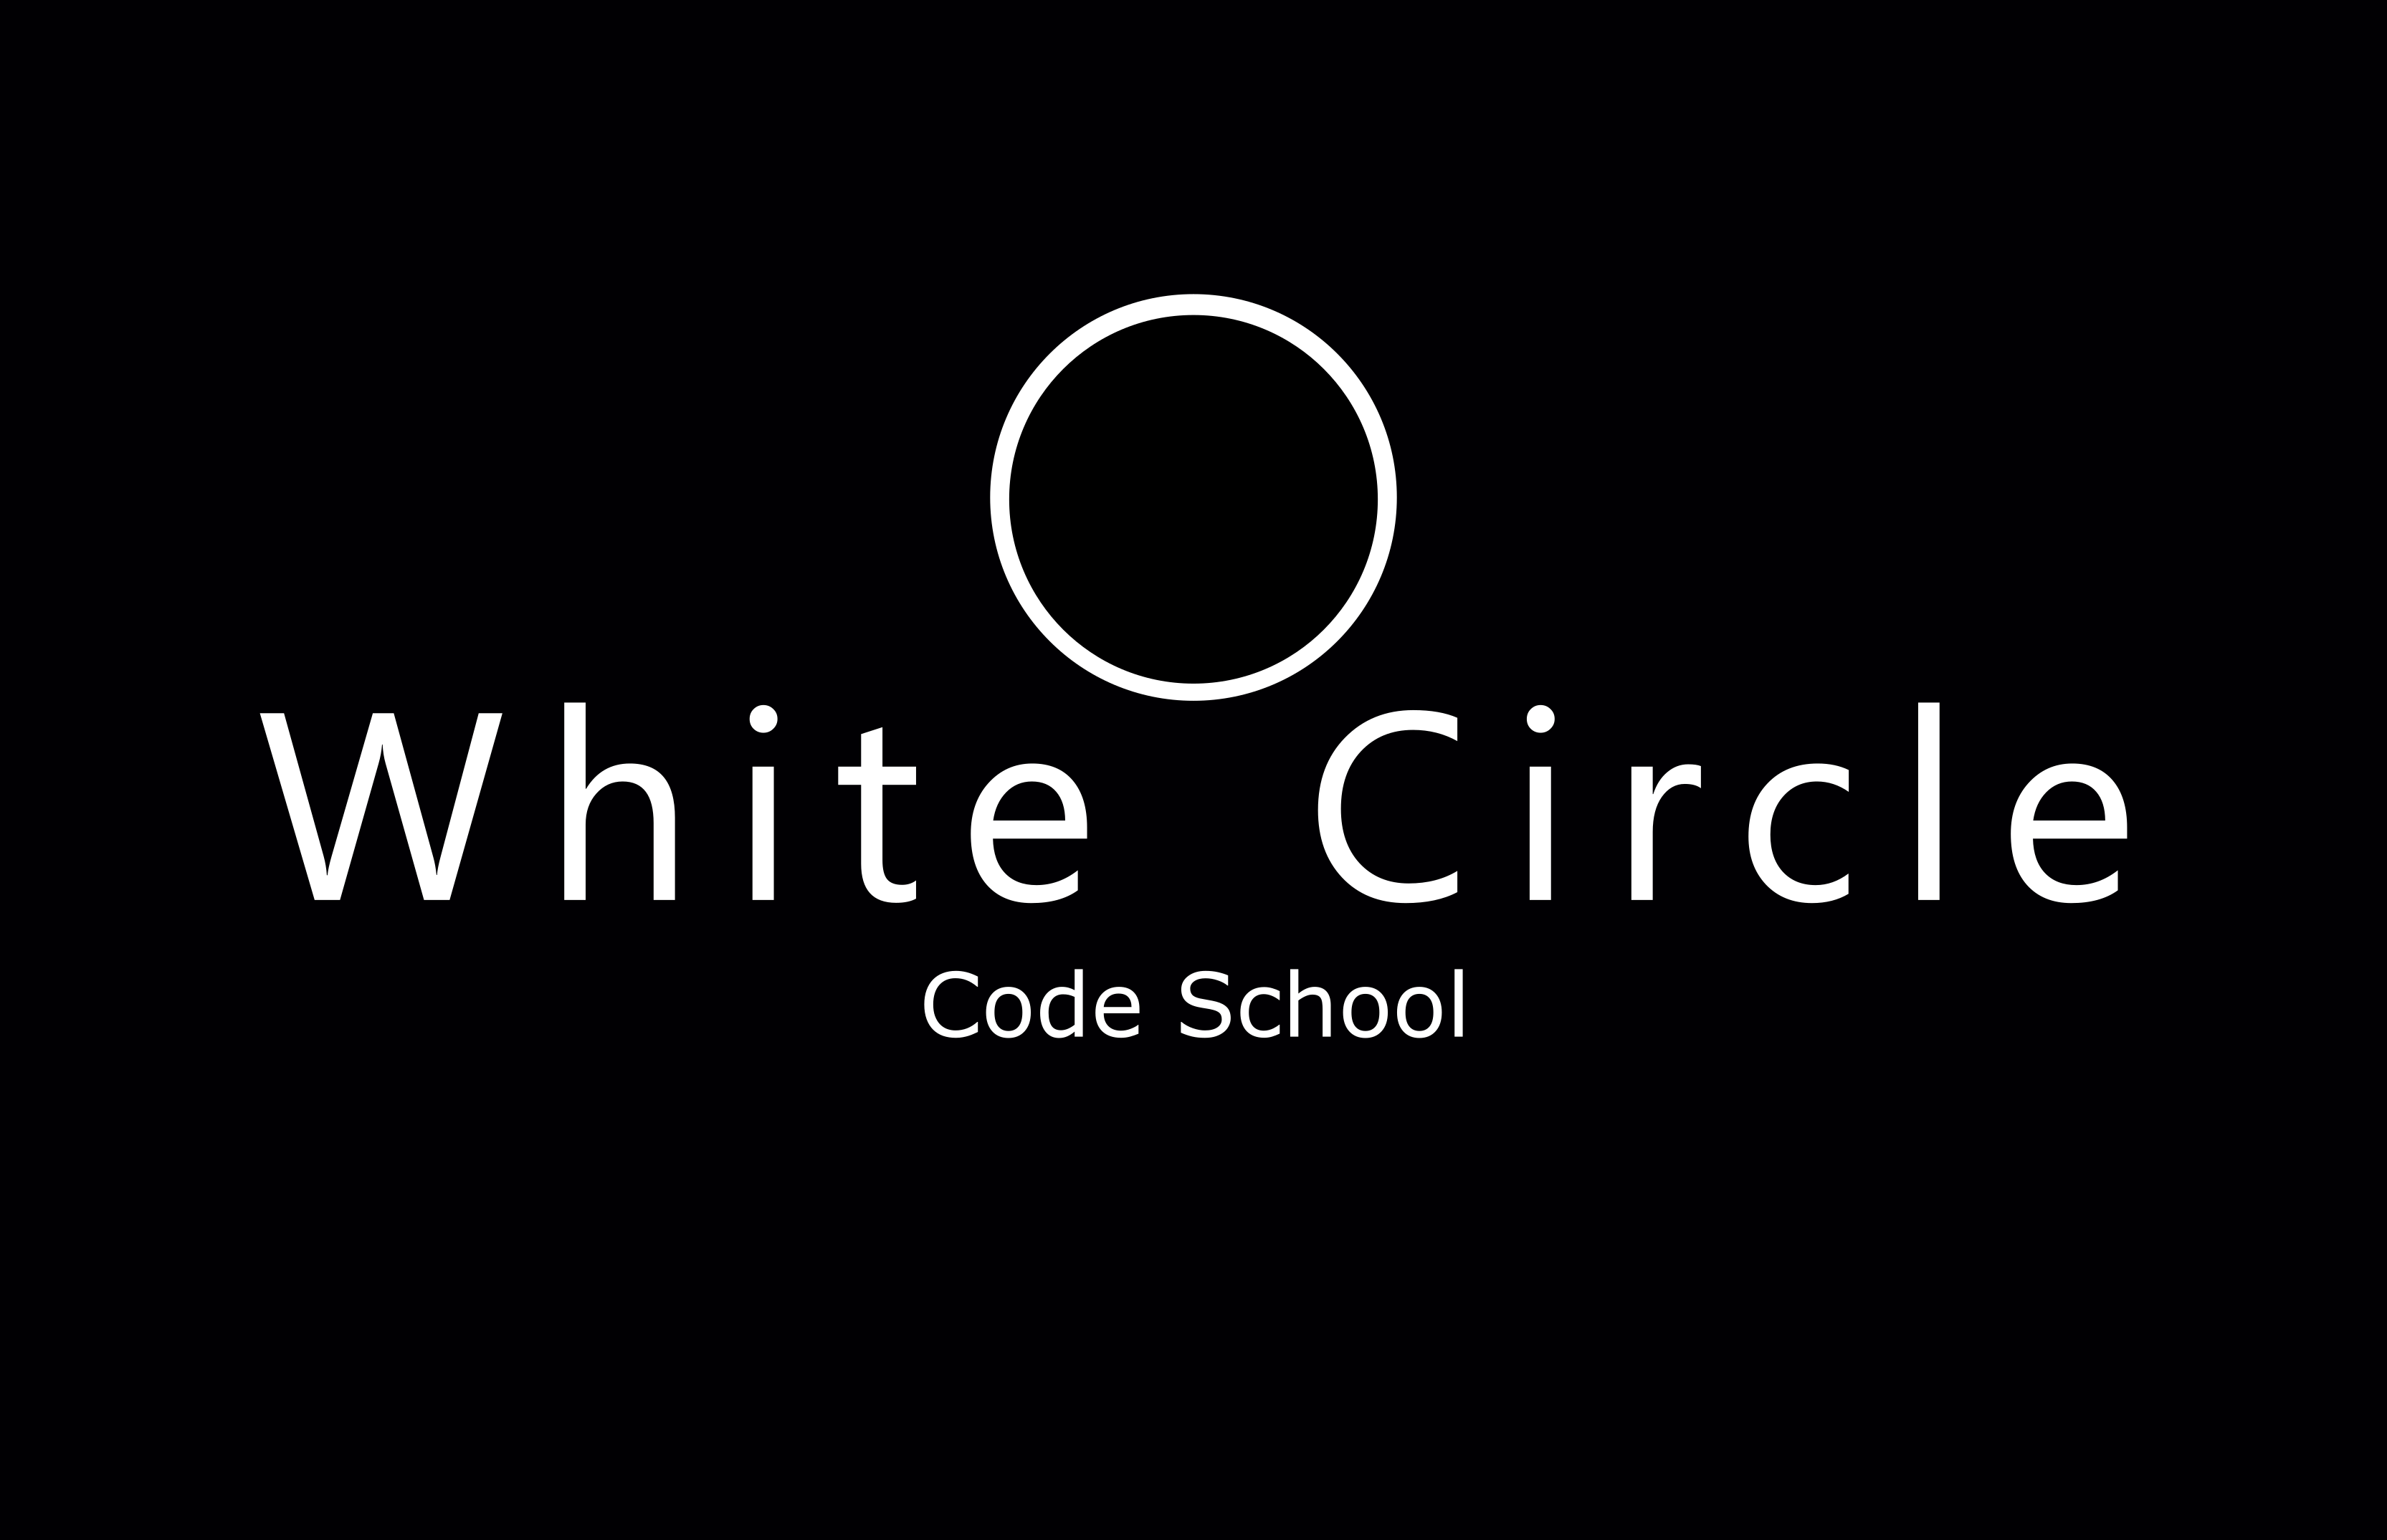 White Circle Code School